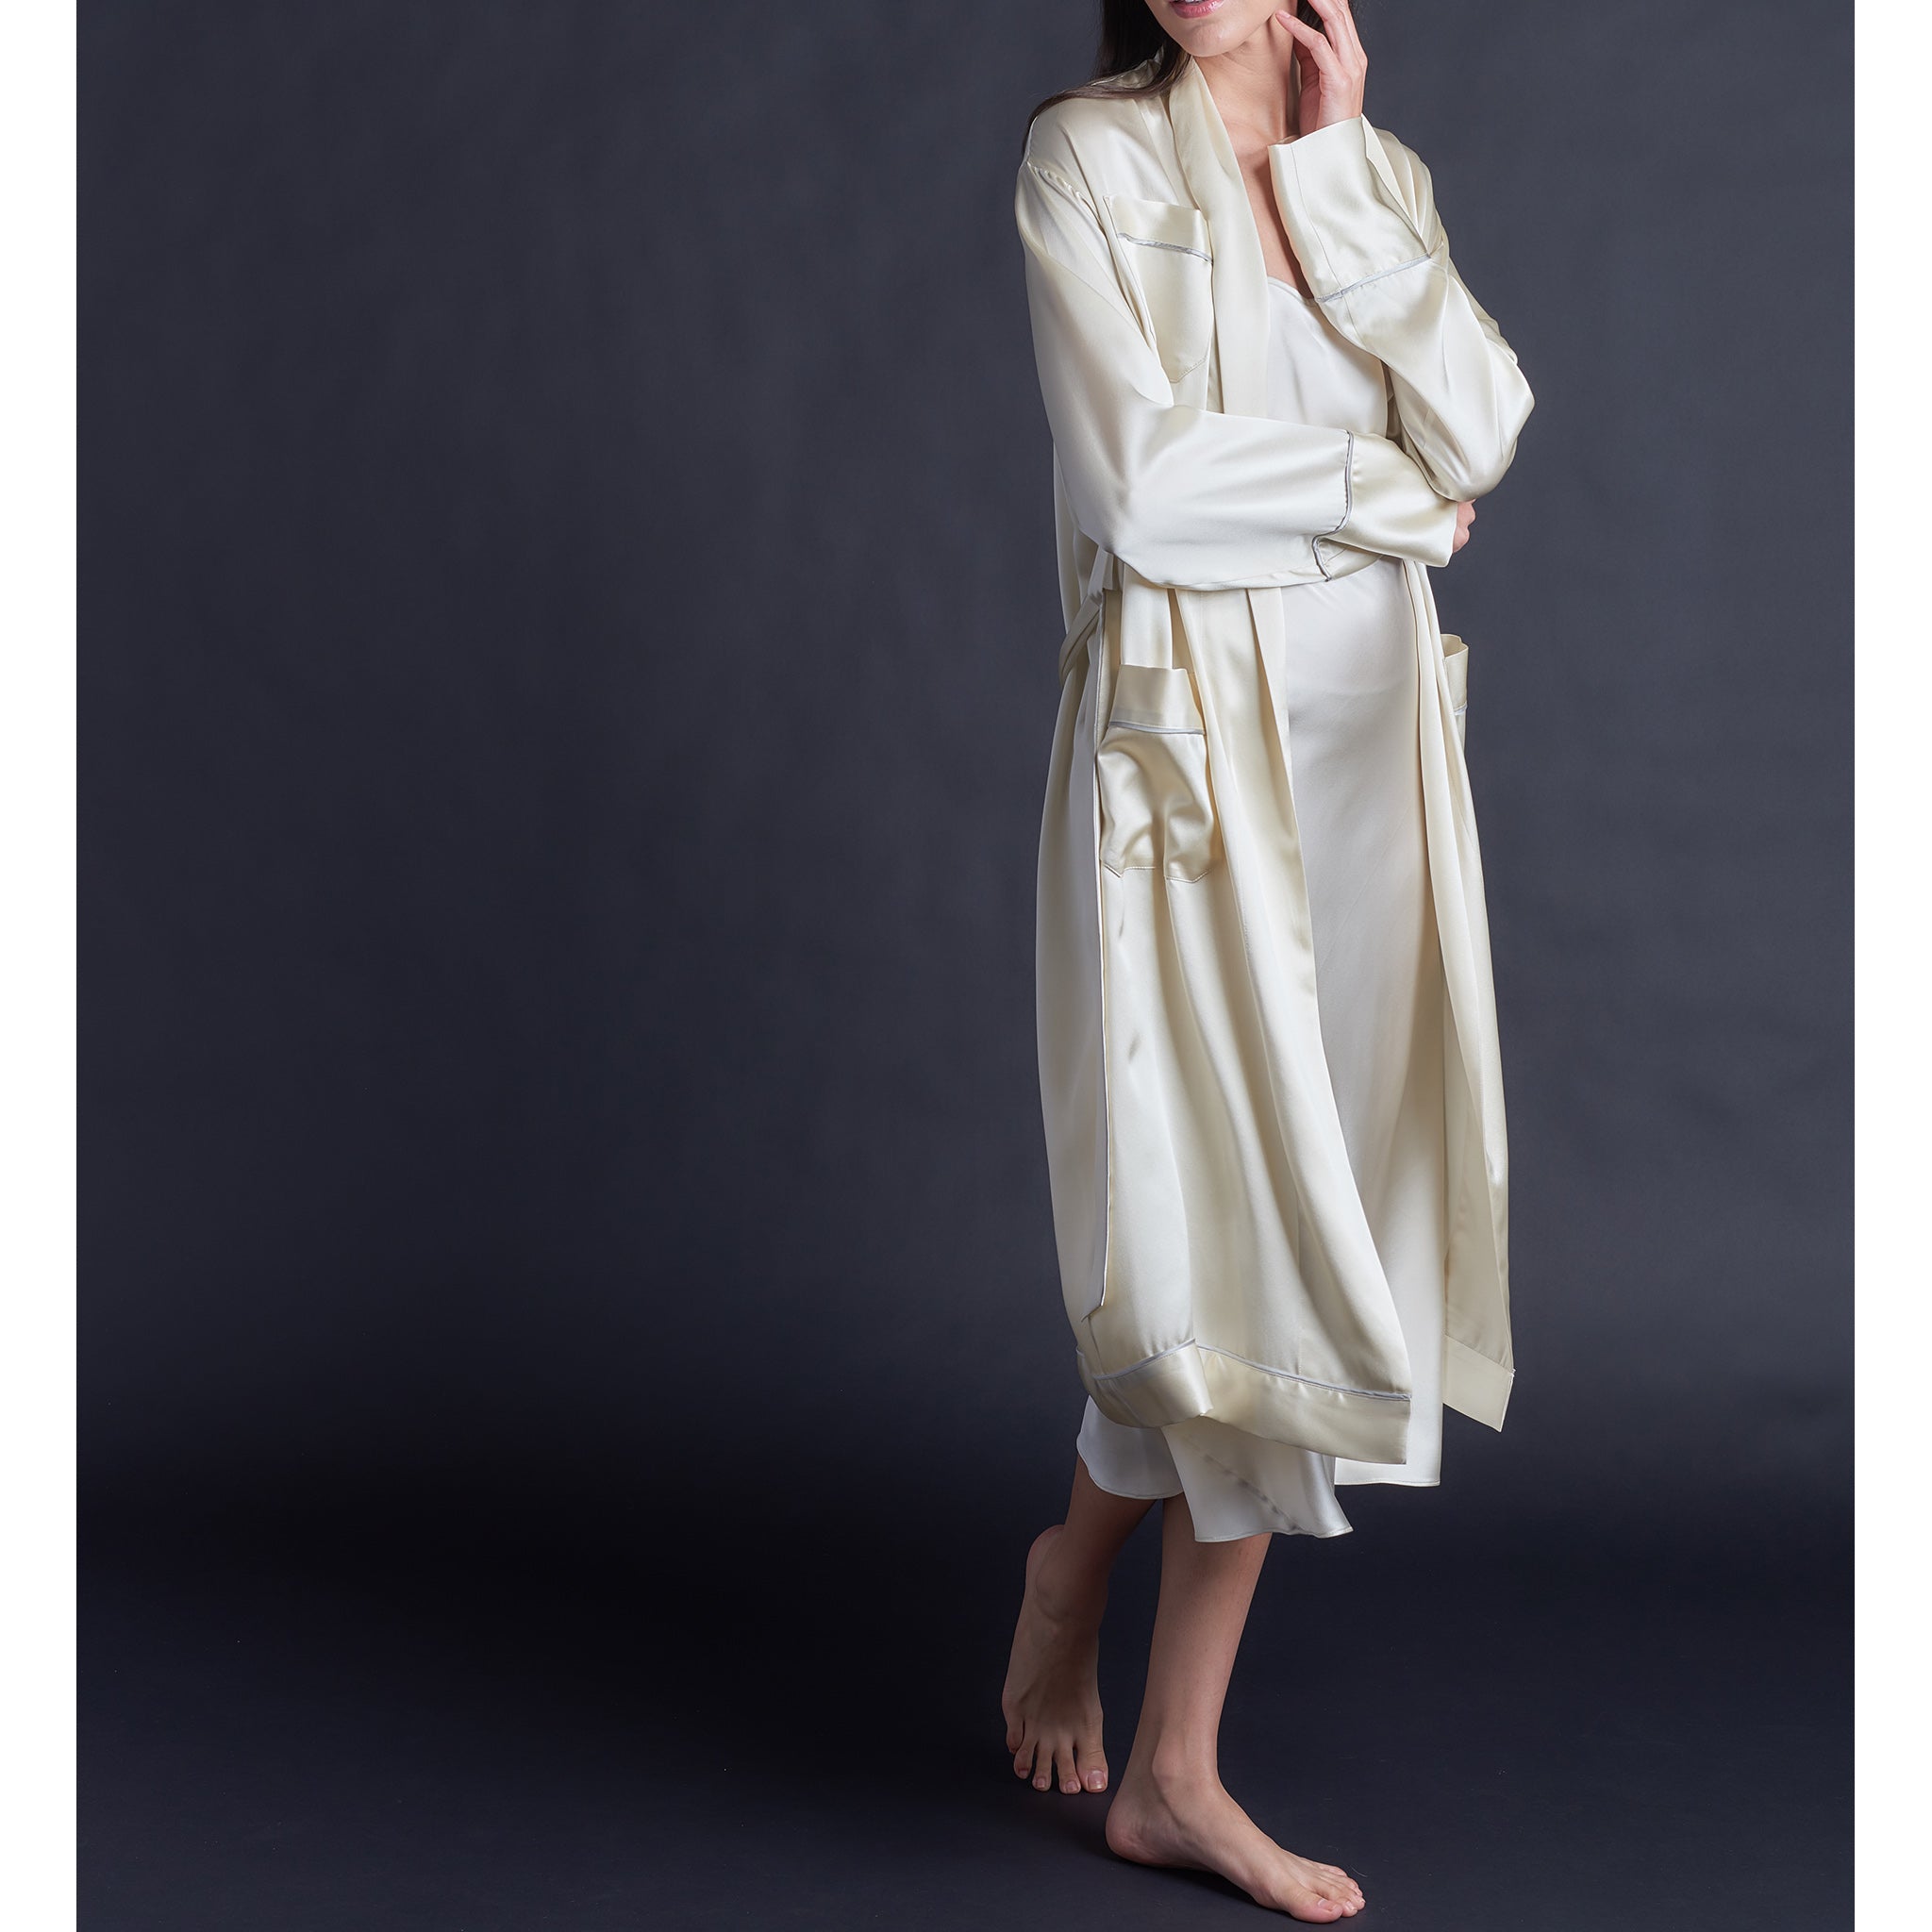 Celeste Tea Length Slip Dress in Pearl Stretch Silk Charmeuse